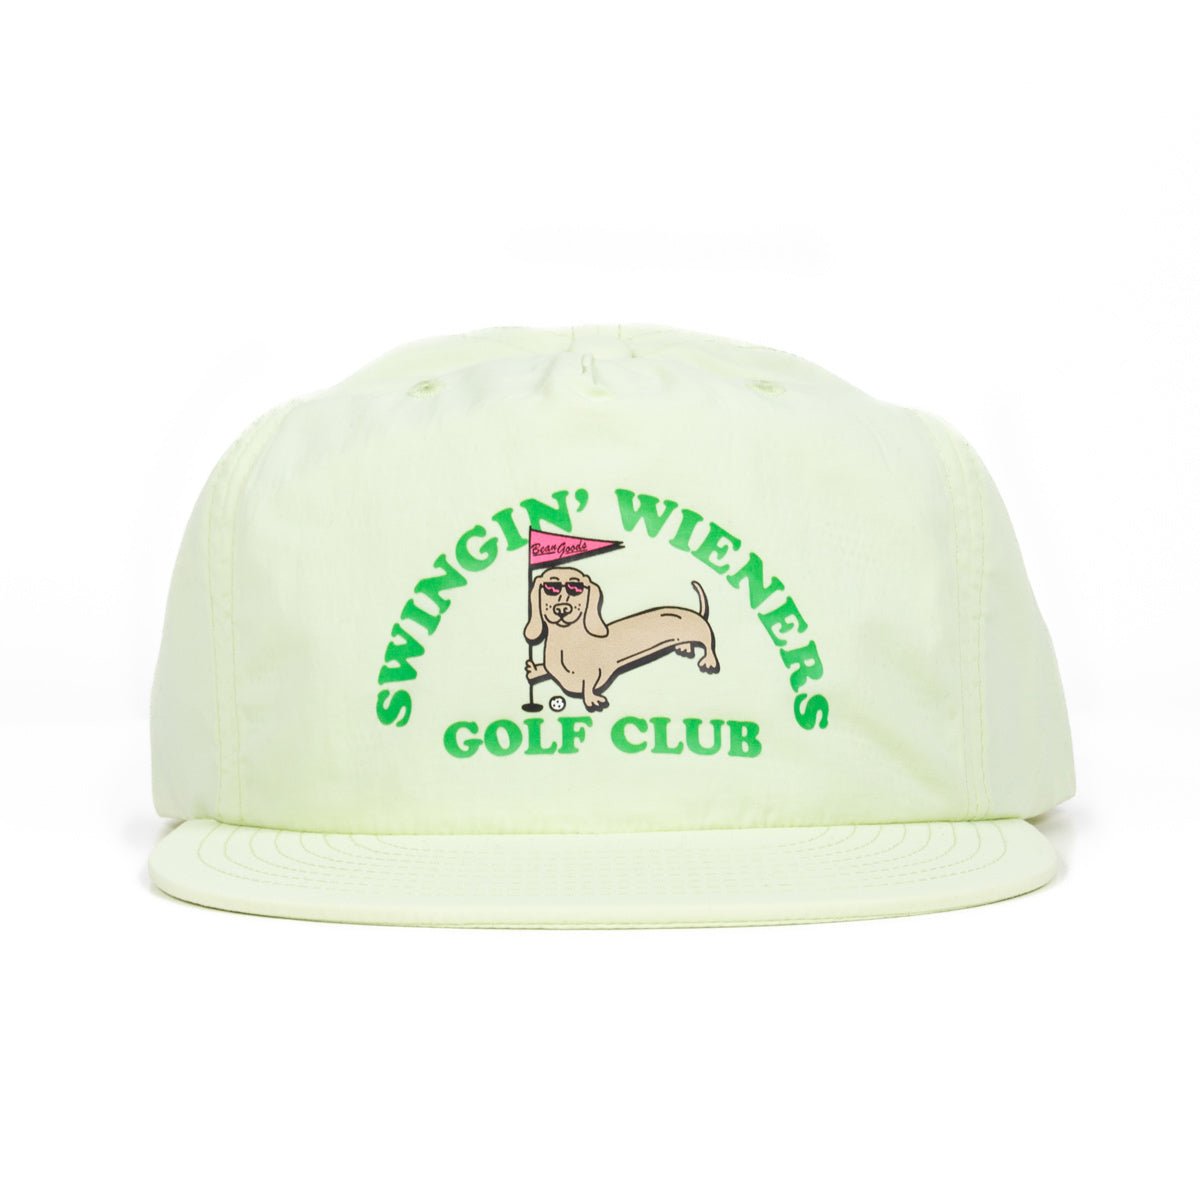 swinging wieners golf club hat - bean goods